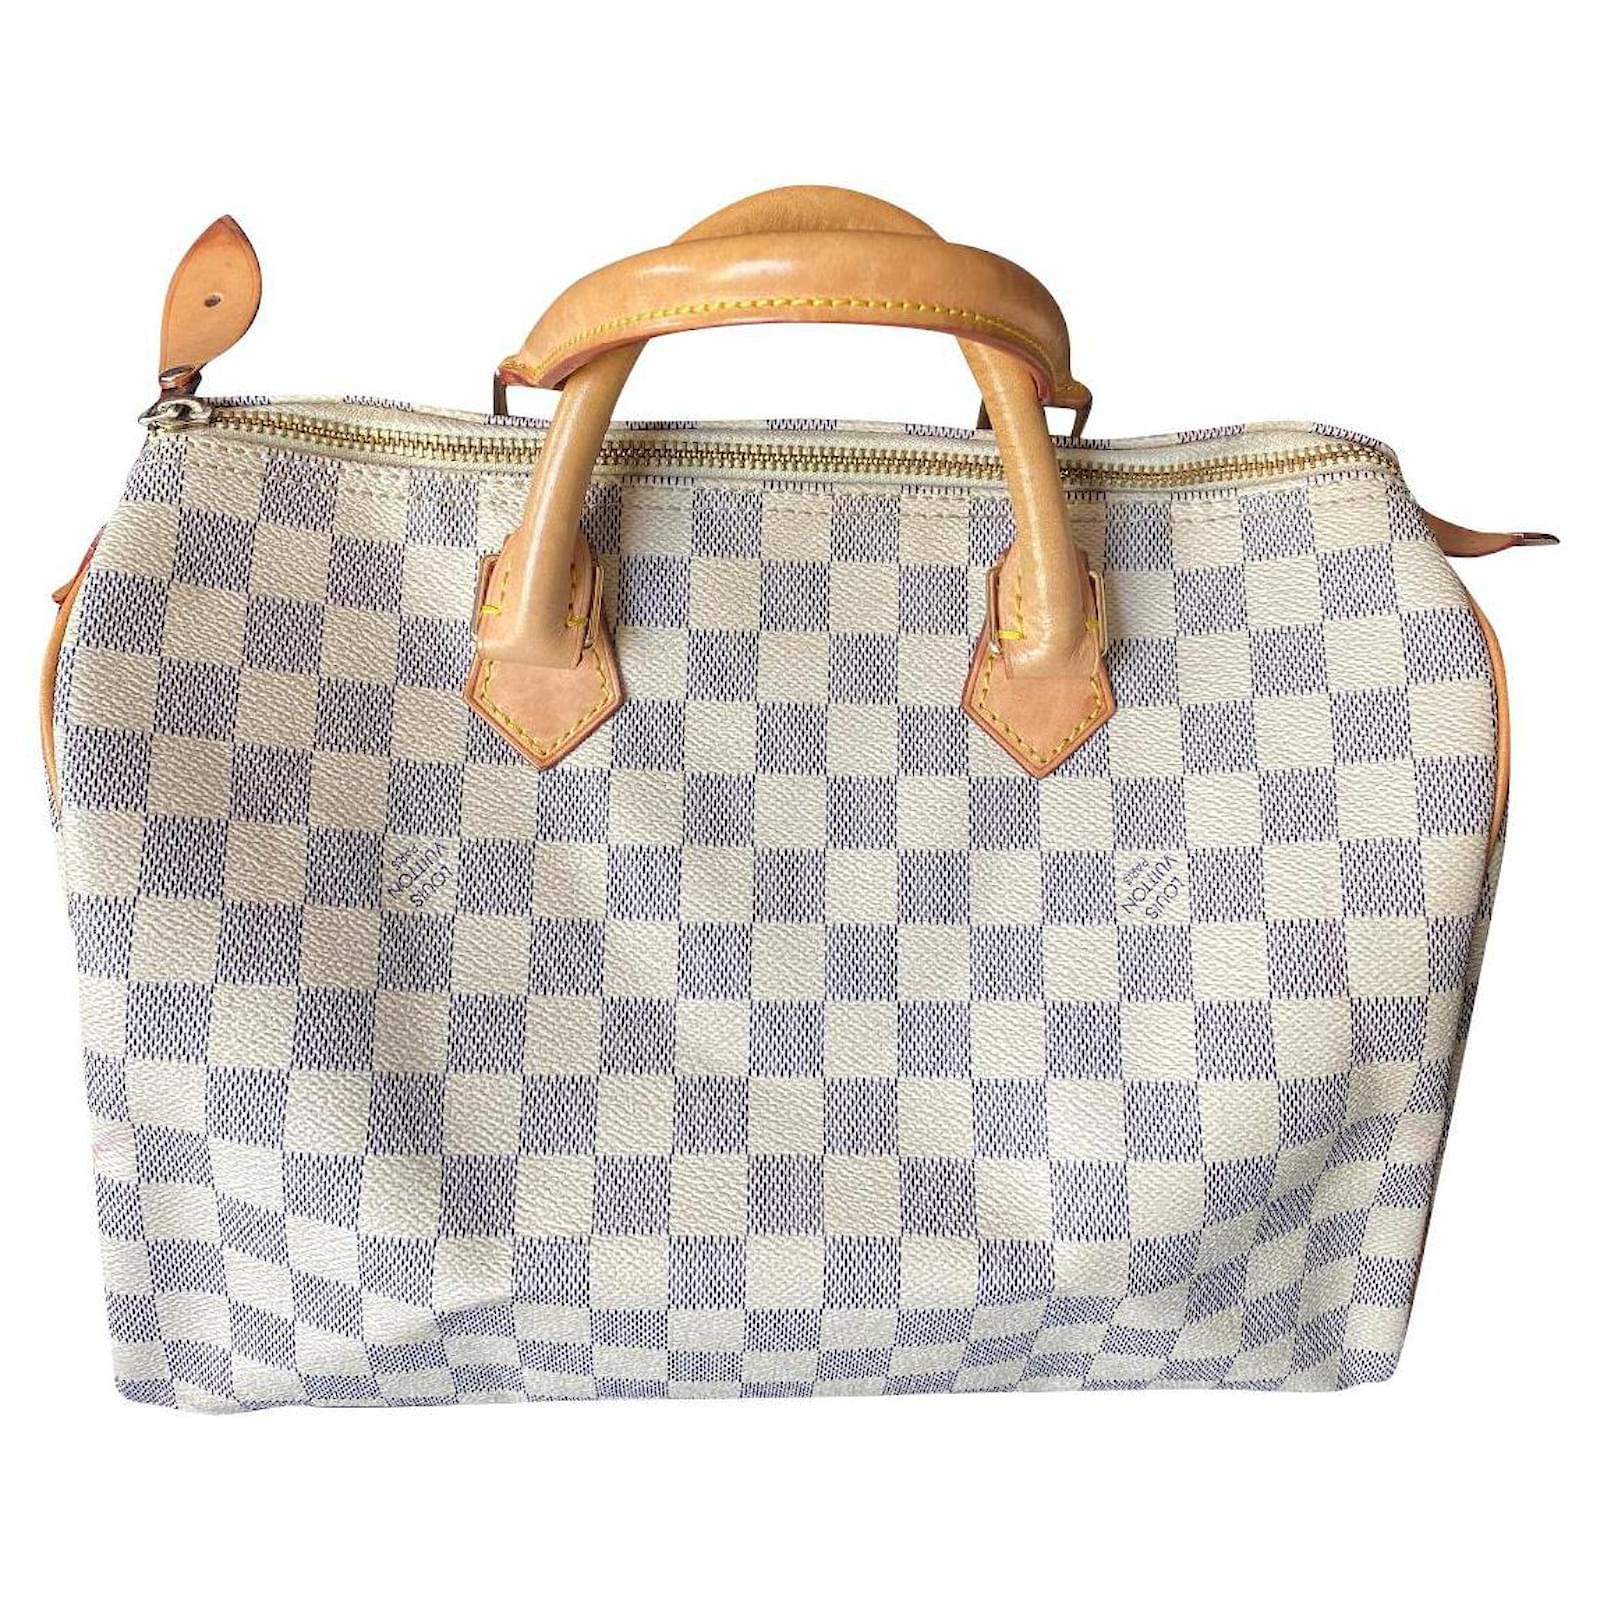 Louis Vuitton Womens Handbags, Blue